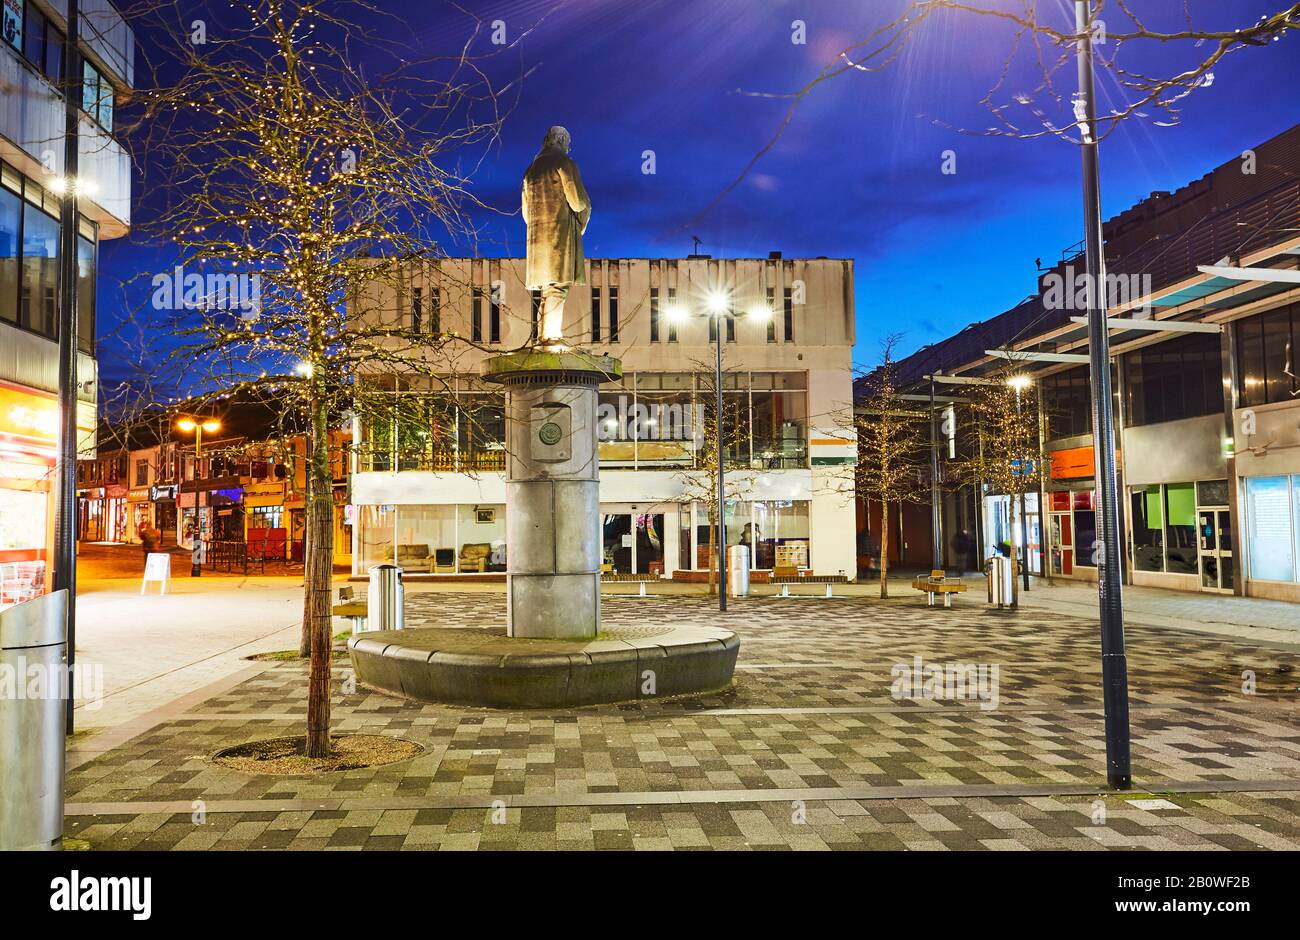 City Centre of Swindon with statue of Isambard Kingdom Brunel illuminated at night Stock Photo